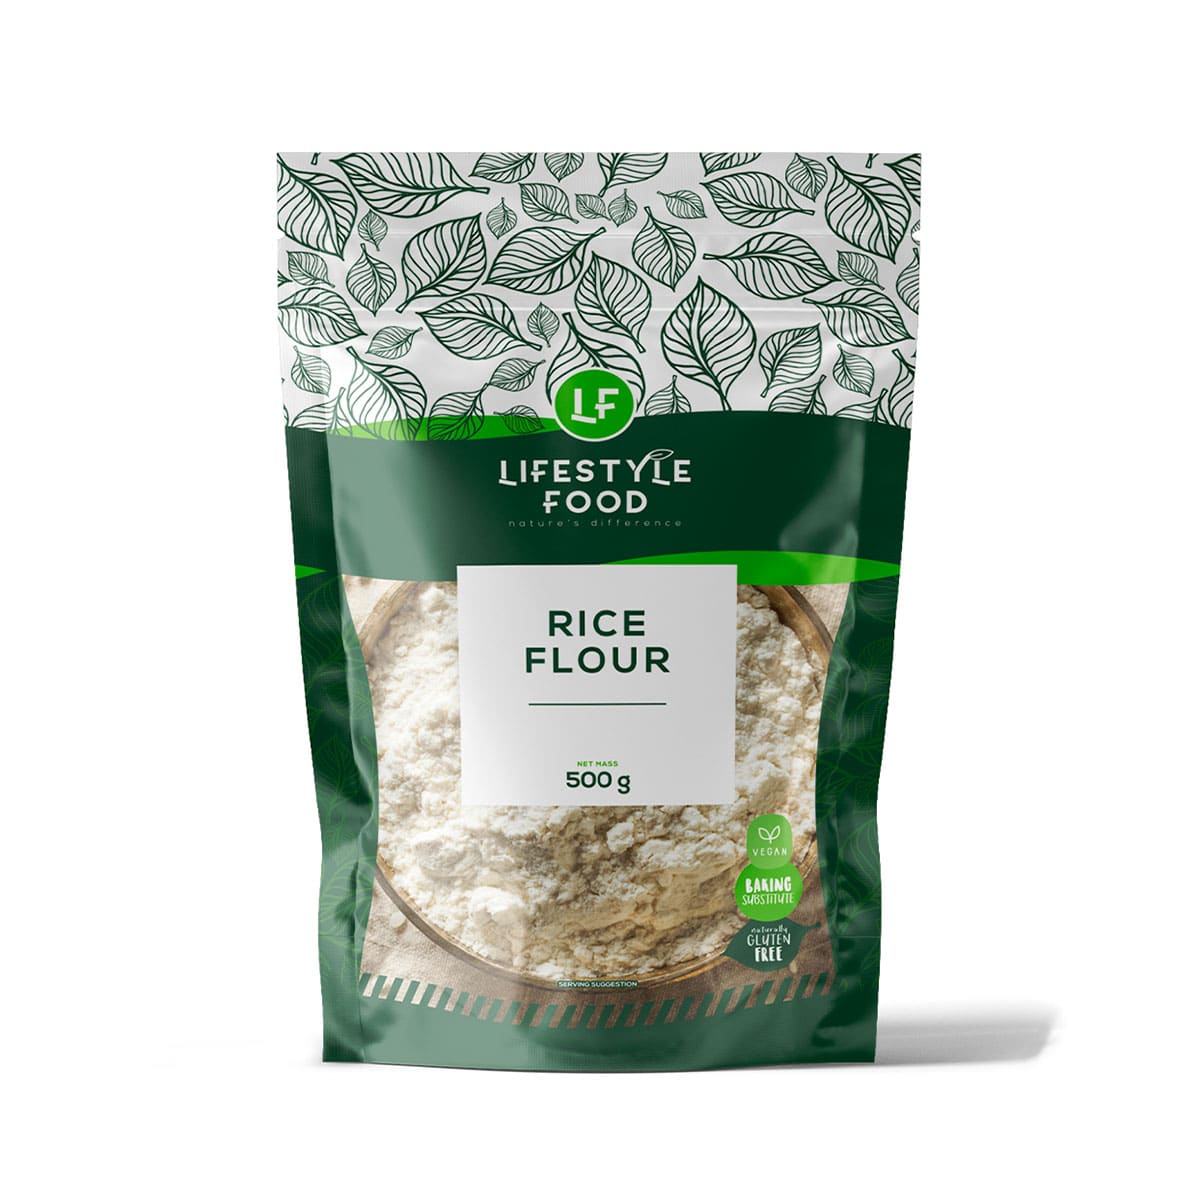 Lifestyle Food Gluten Free Rice Flour - 500g